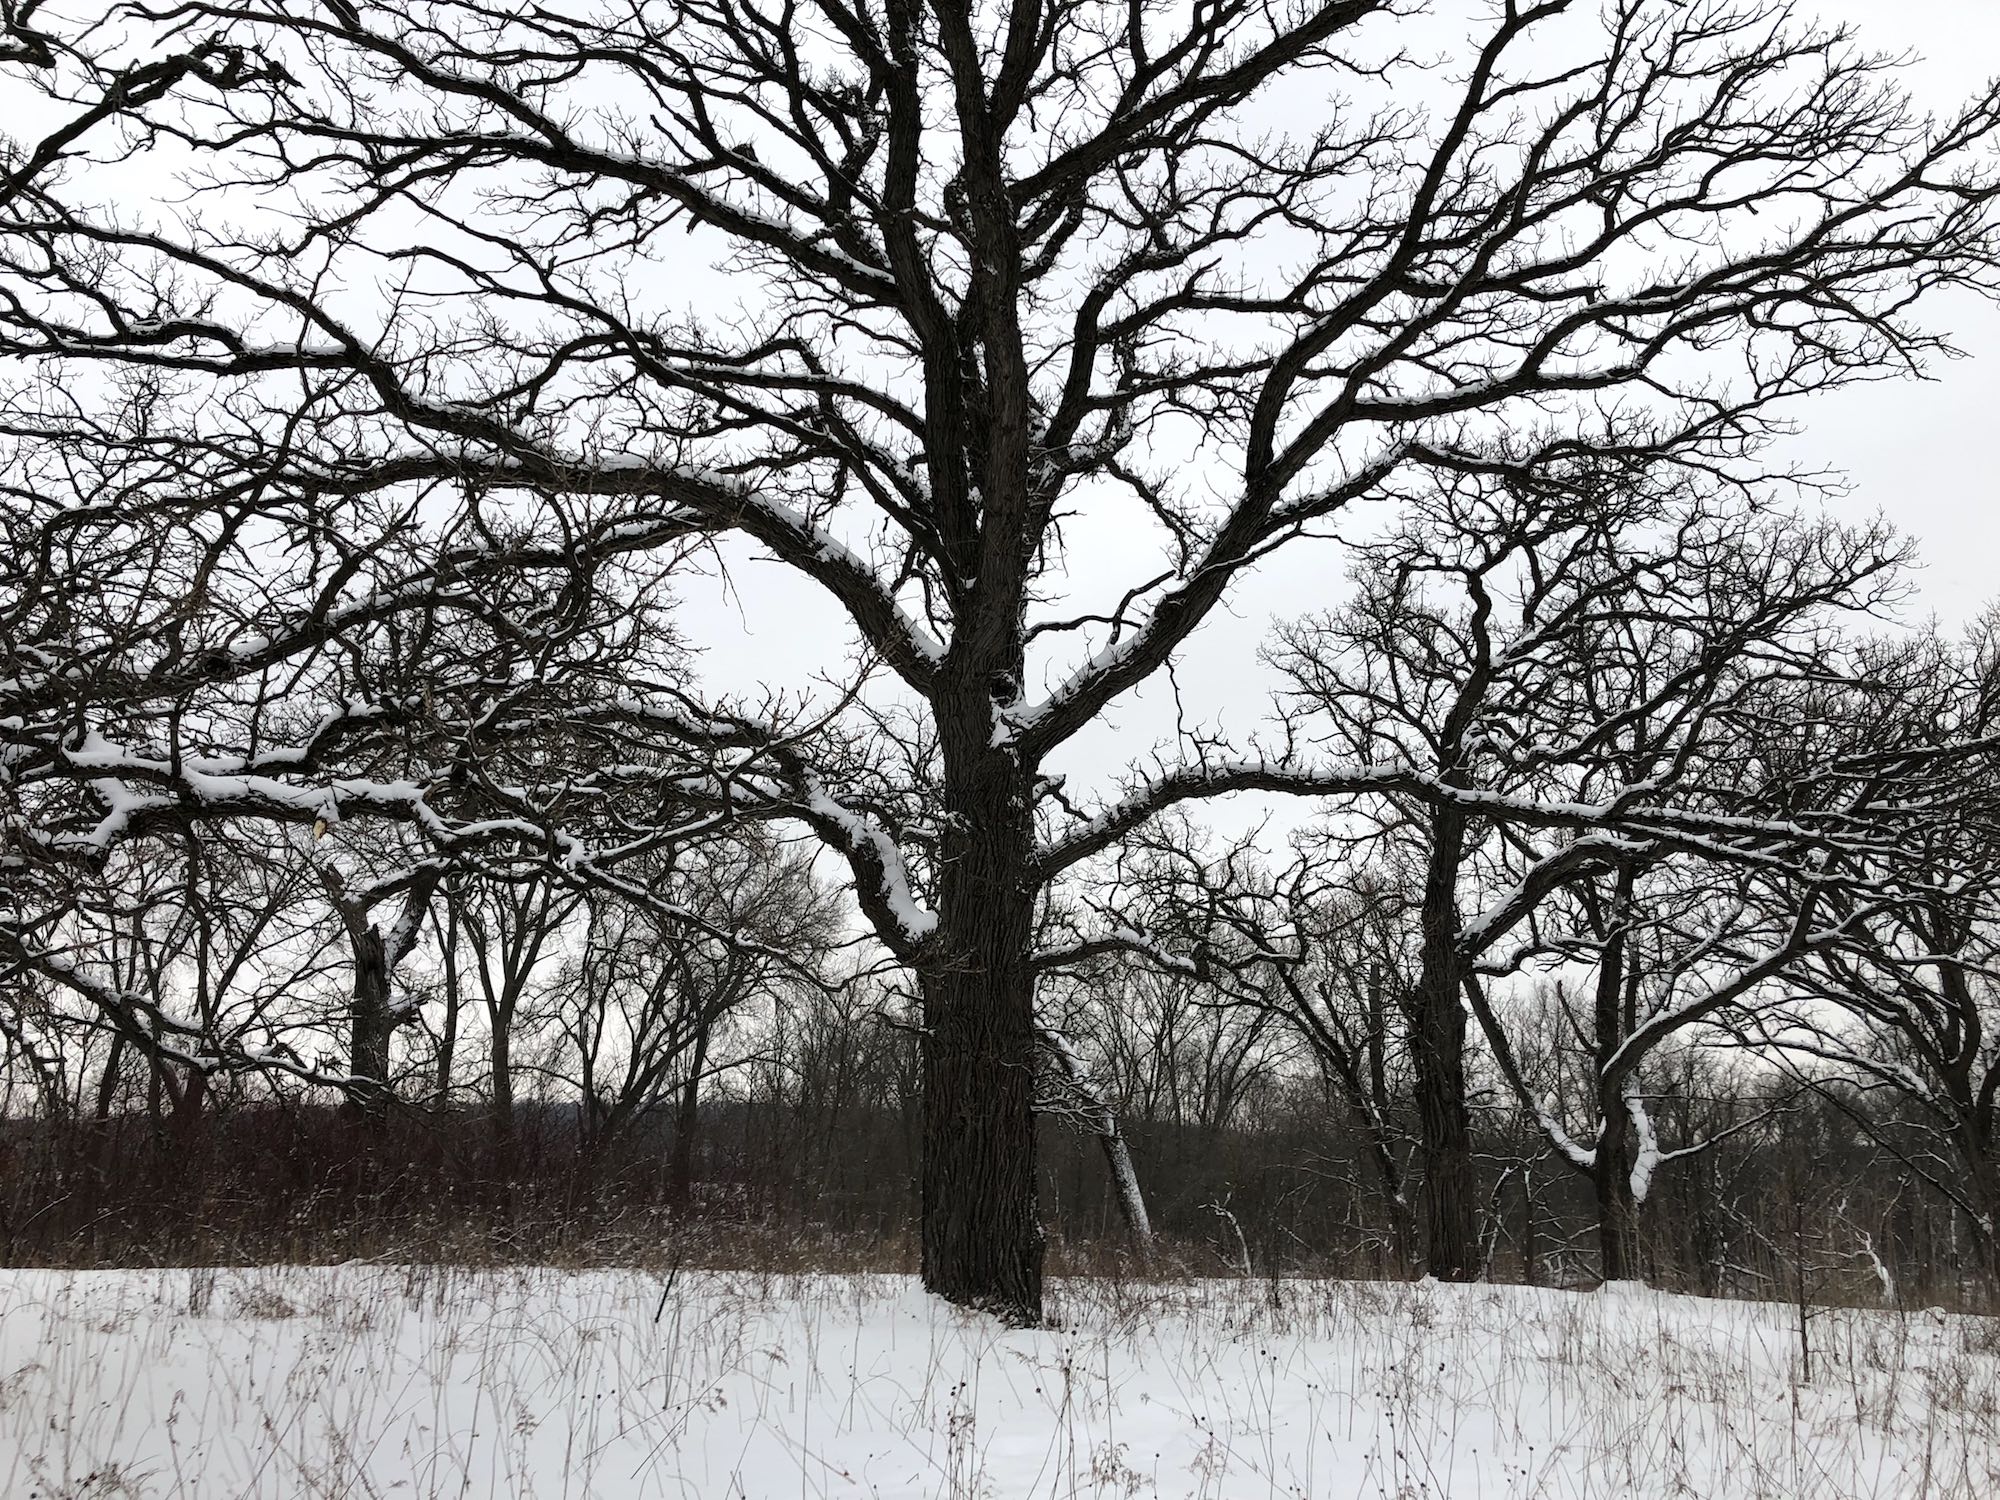 Oak Savanna on February 20, 2019 in University of Wisconsin Arboretum in Madison, Wisconsin on the north shore of Lake Wingra.